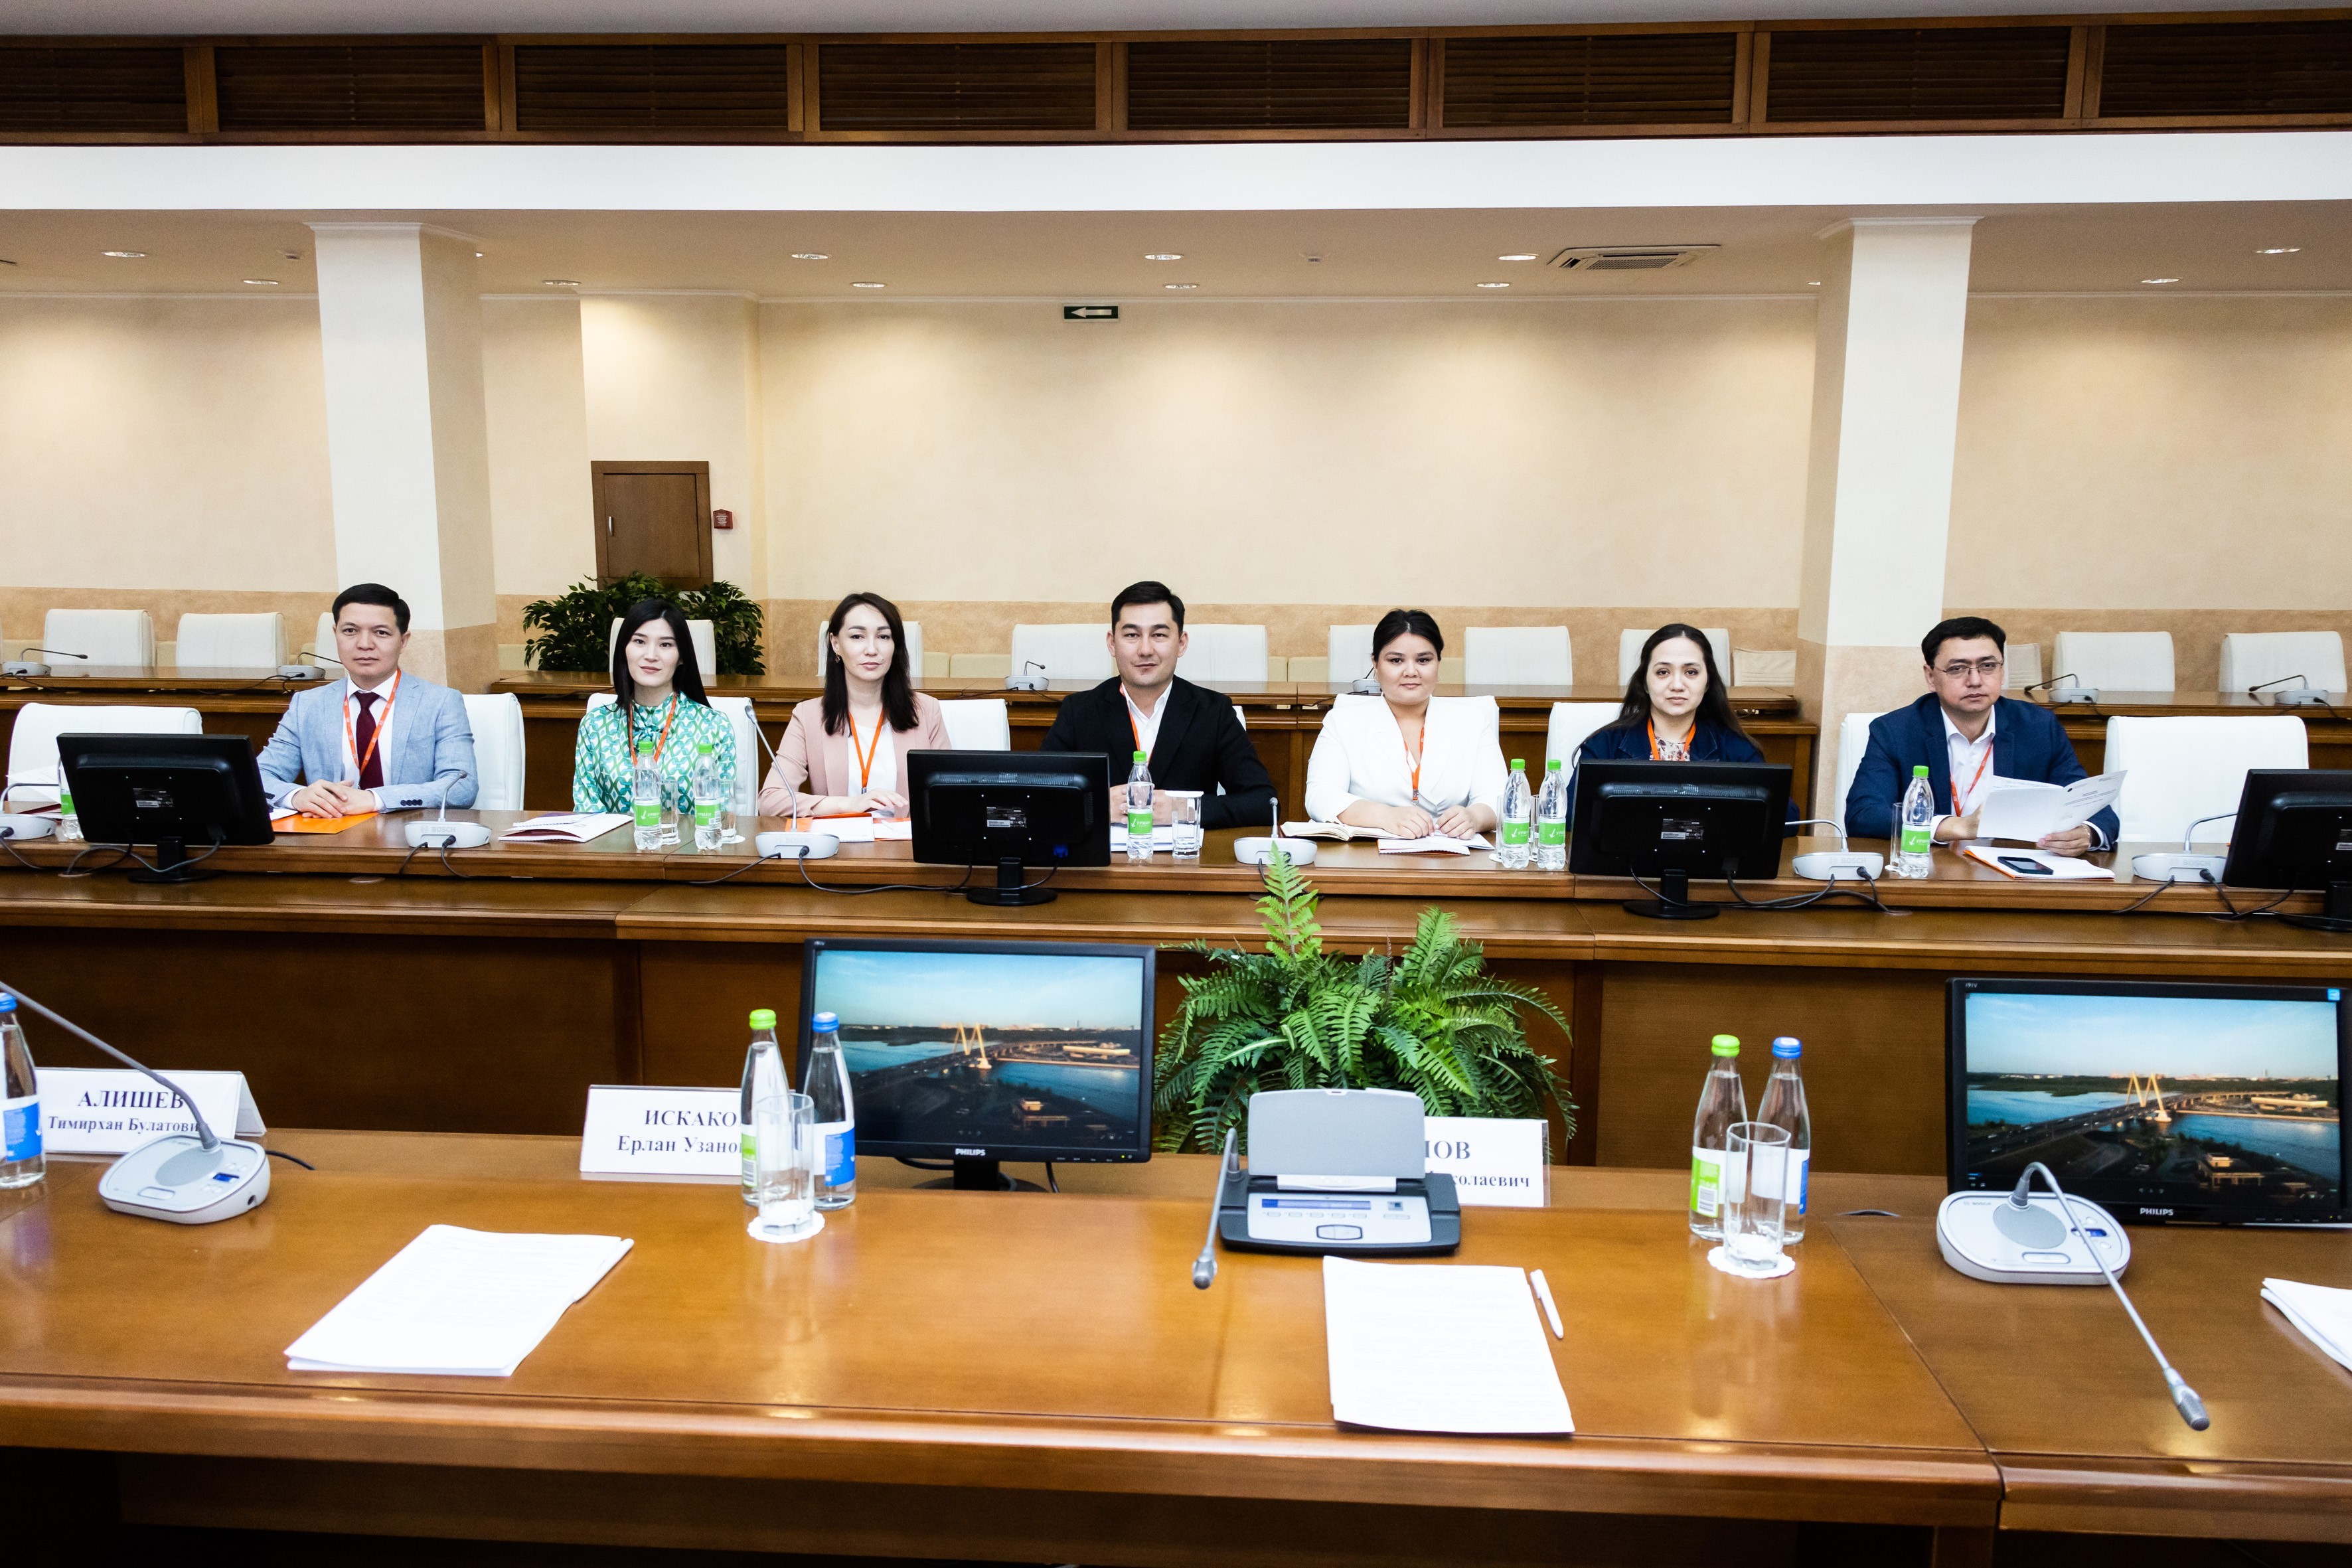 Kazakhstan's public servants participate in the internship's prepared by HSPA ,-